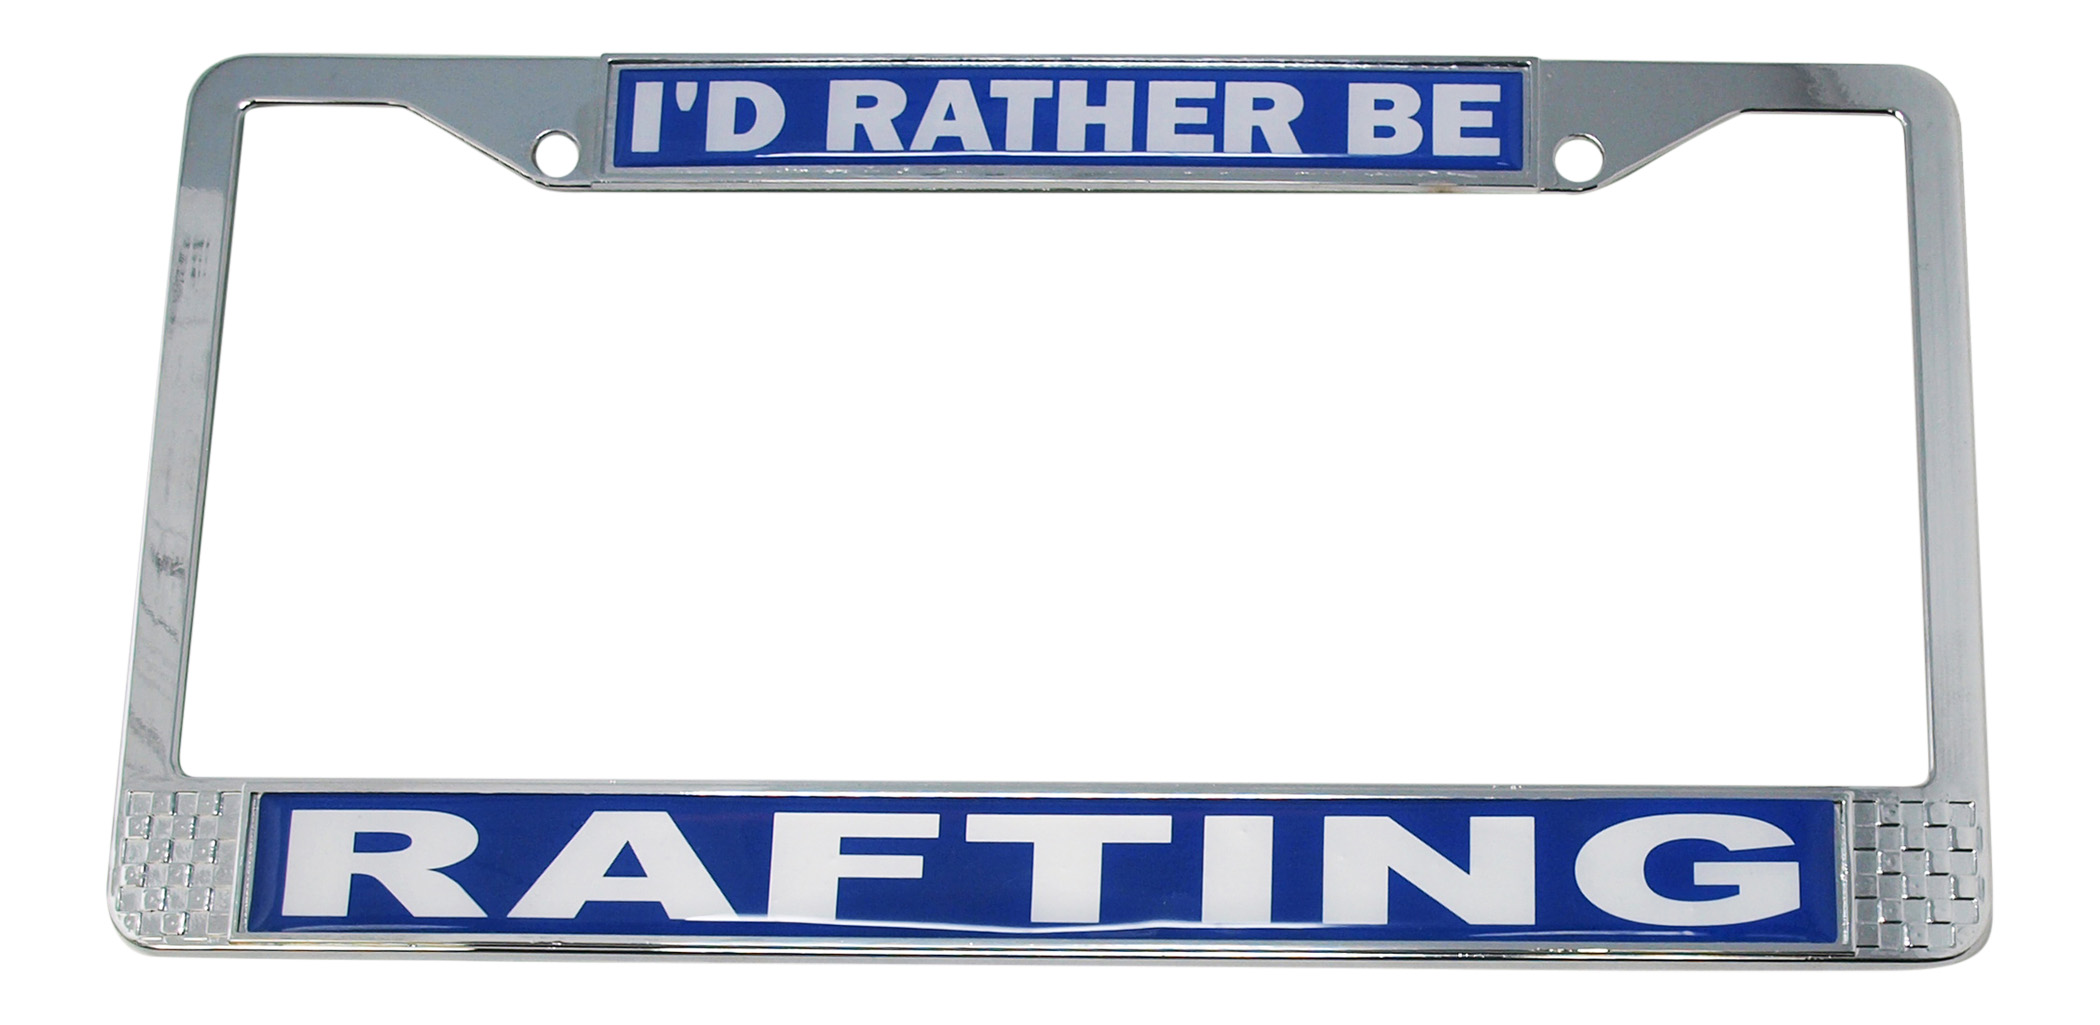 I'd Rather Be Rafting License Plate Frame